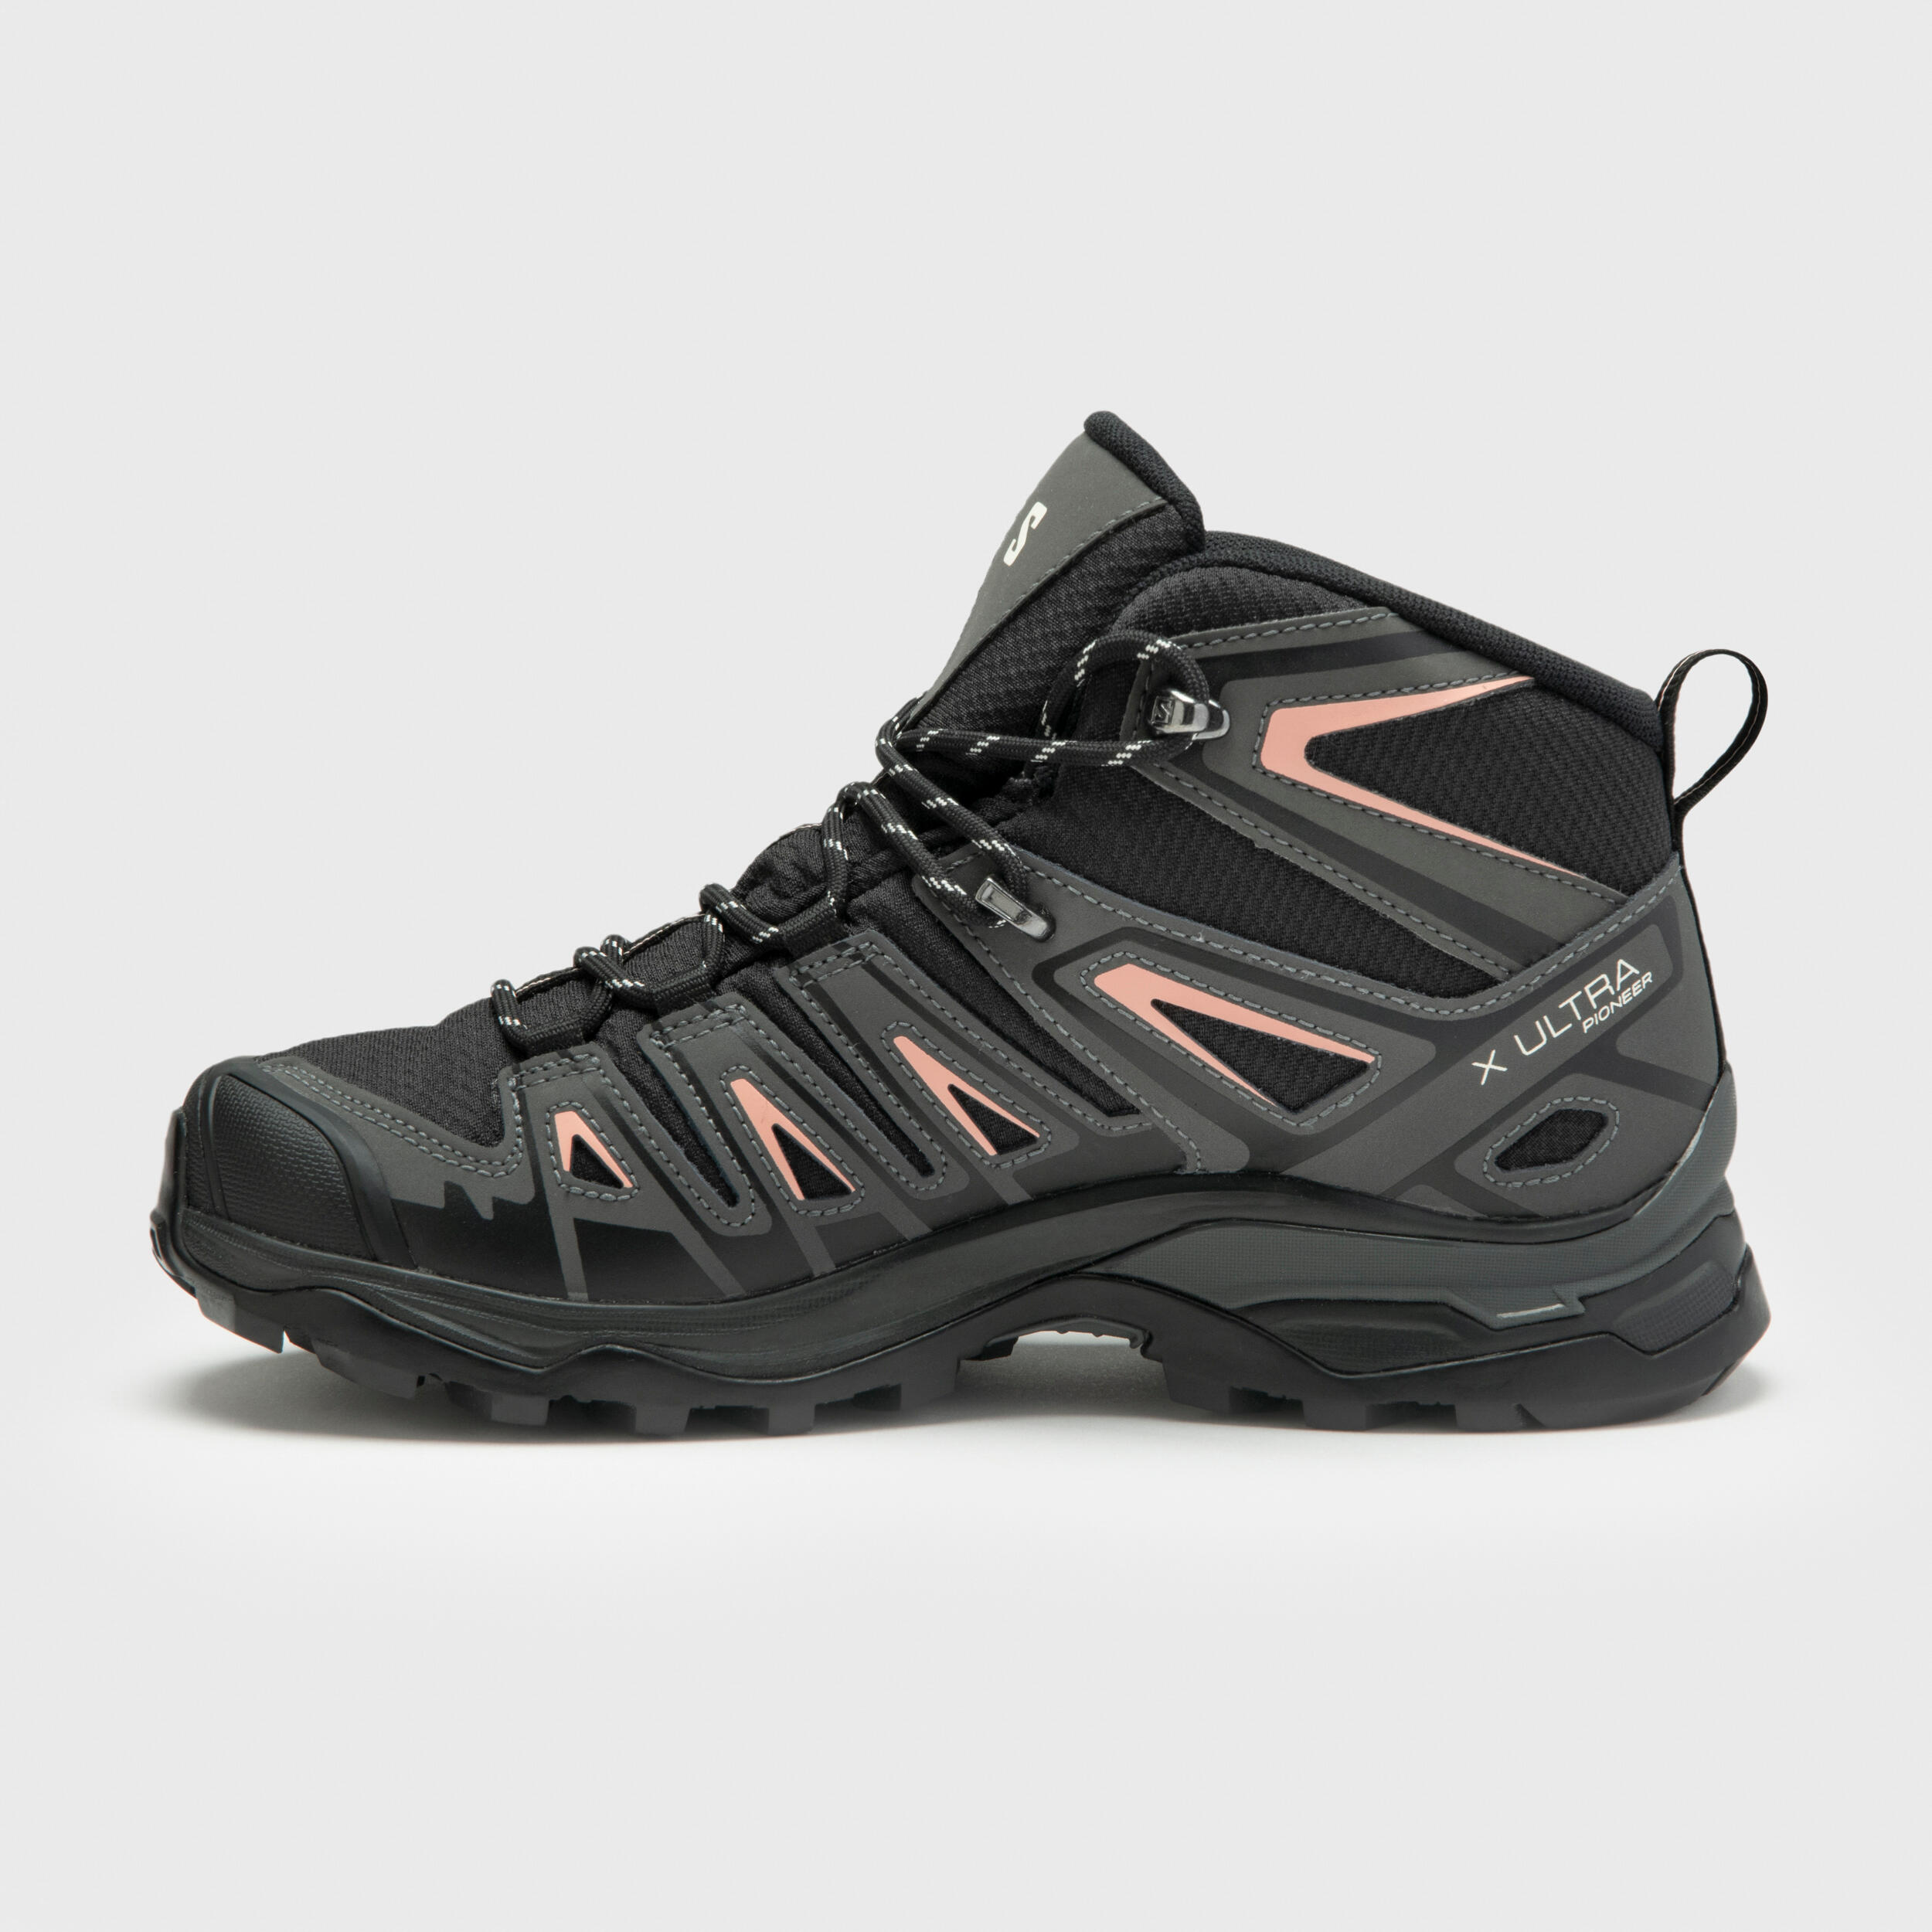 Mountain hiking shoes - Salomon X ULTRA Pioneer GoreTex Mid